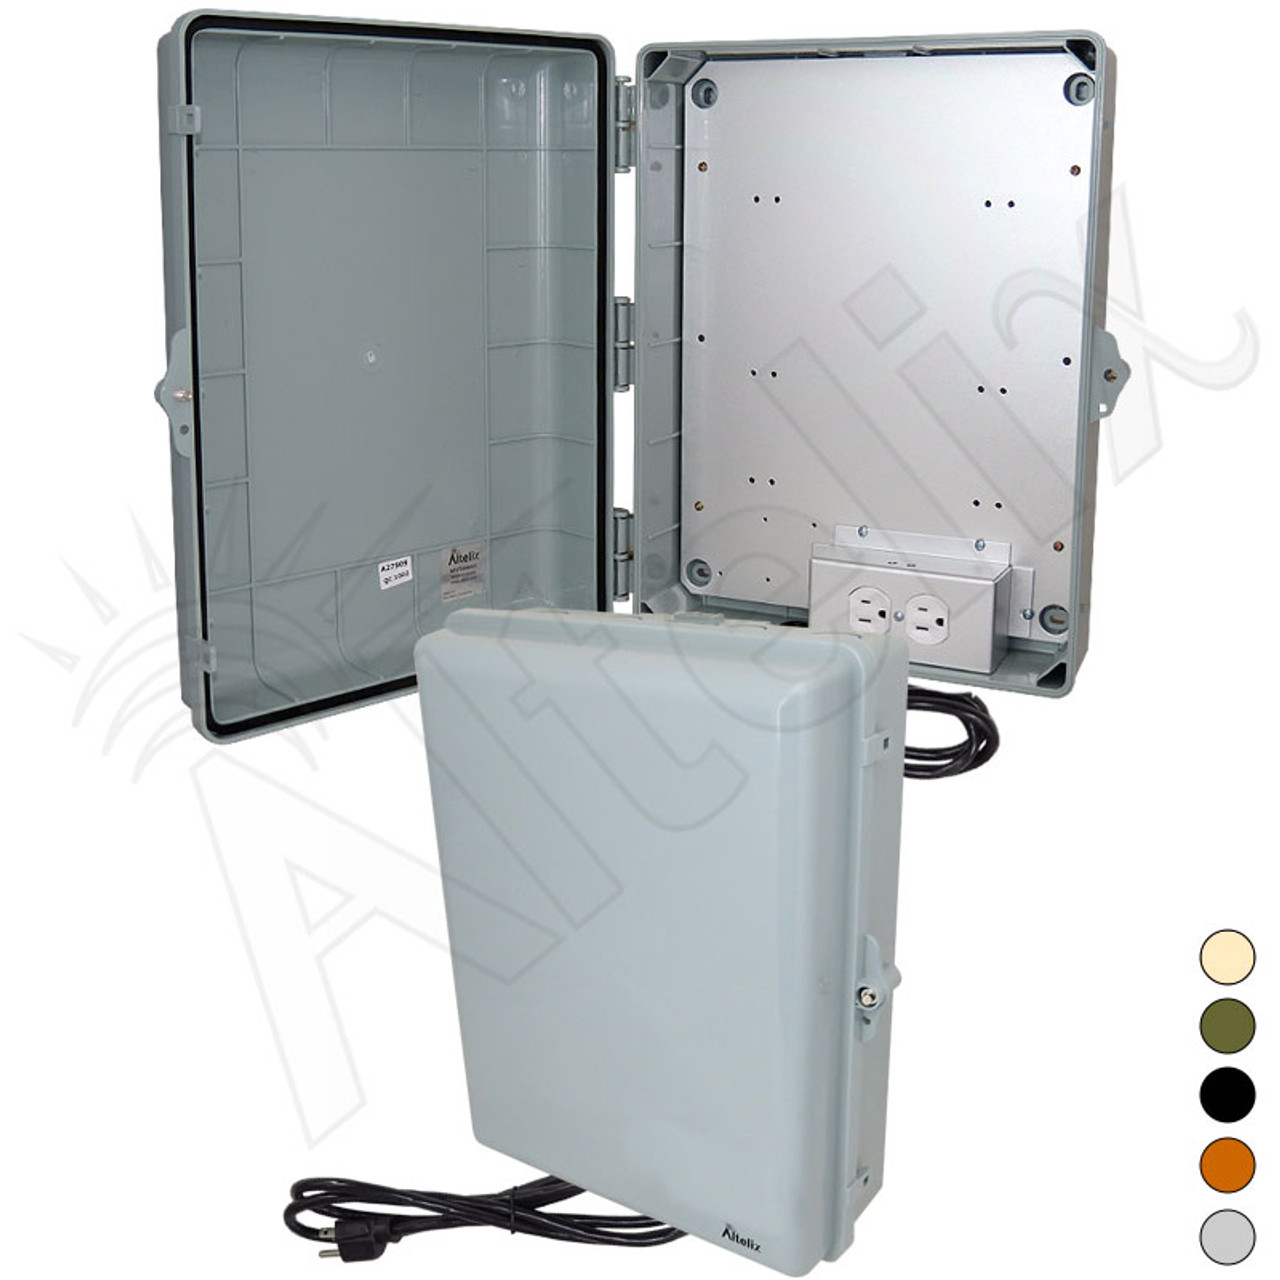 Altelix 17x14x6 PC + ABS Weatherproof Power Box NEMA Enclosure with 120V  Power Outlets